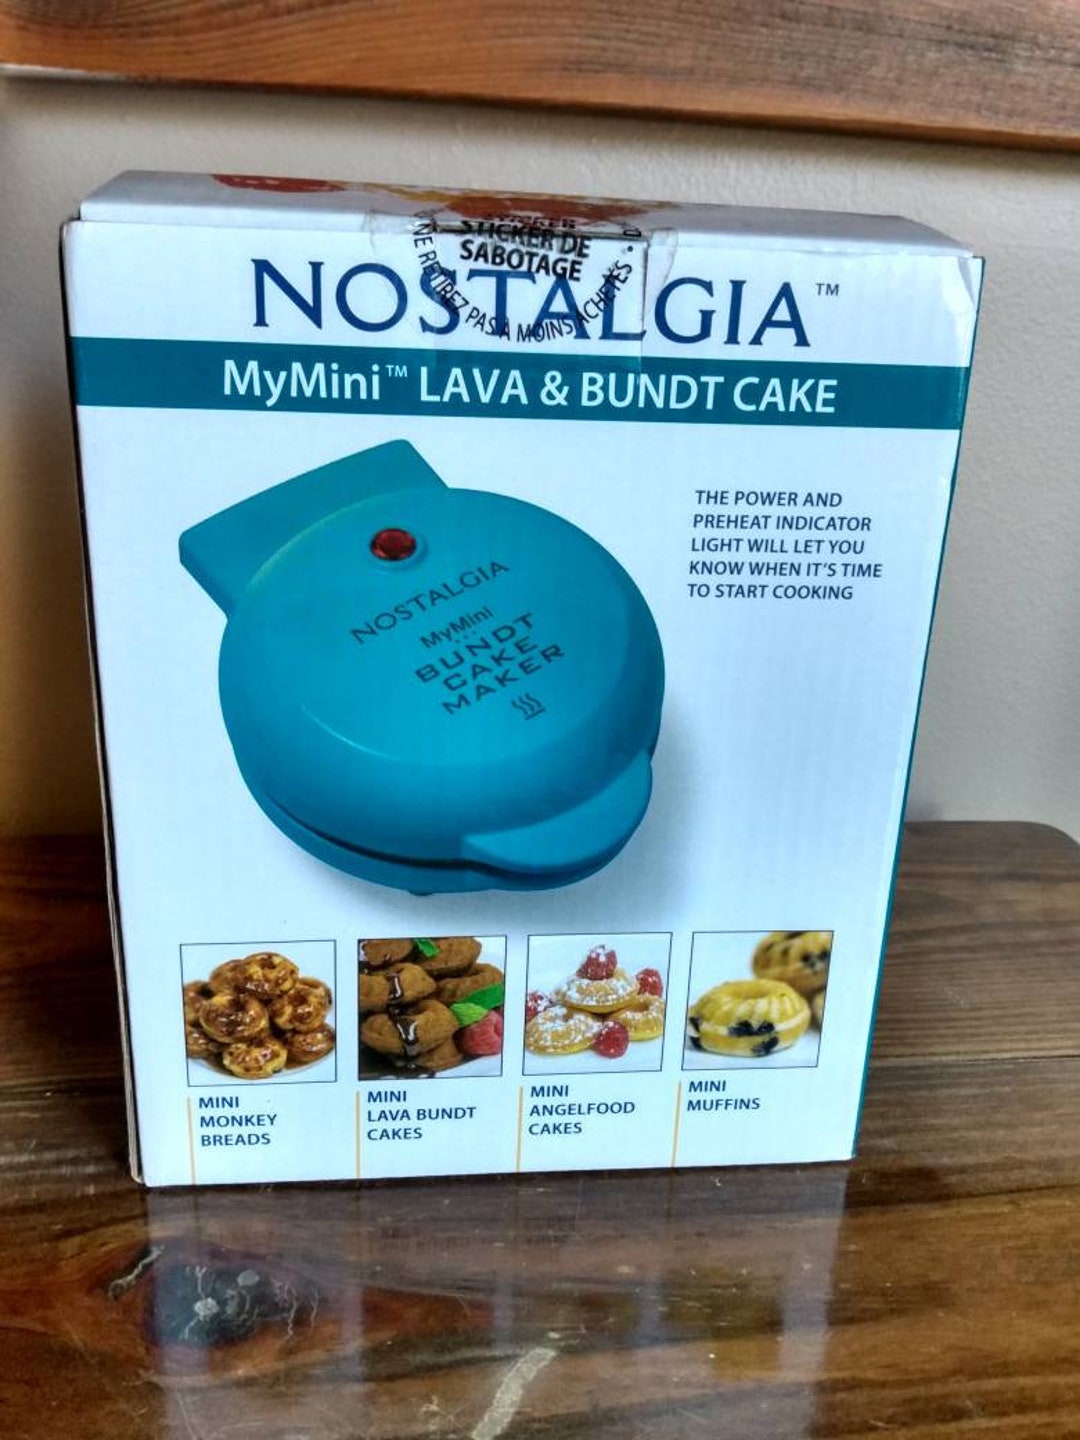  Nostalgia MyMini Lava & Bundt Cake Maker-mini breads